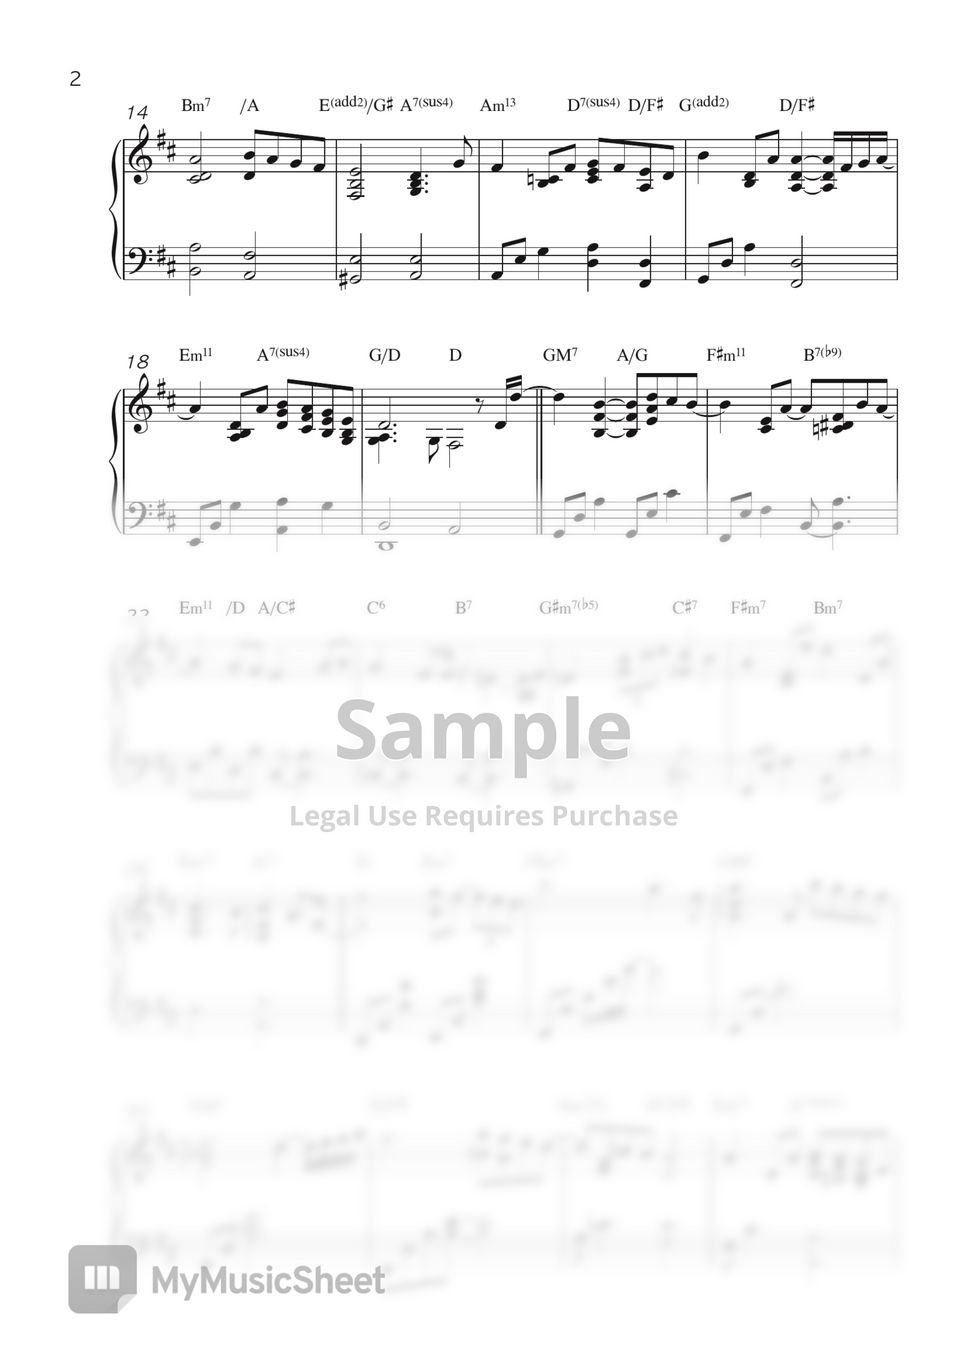 Hymns on Piano - 찬송가 편곡 모음 (Collection) (10%할인) by Ju Eunhye